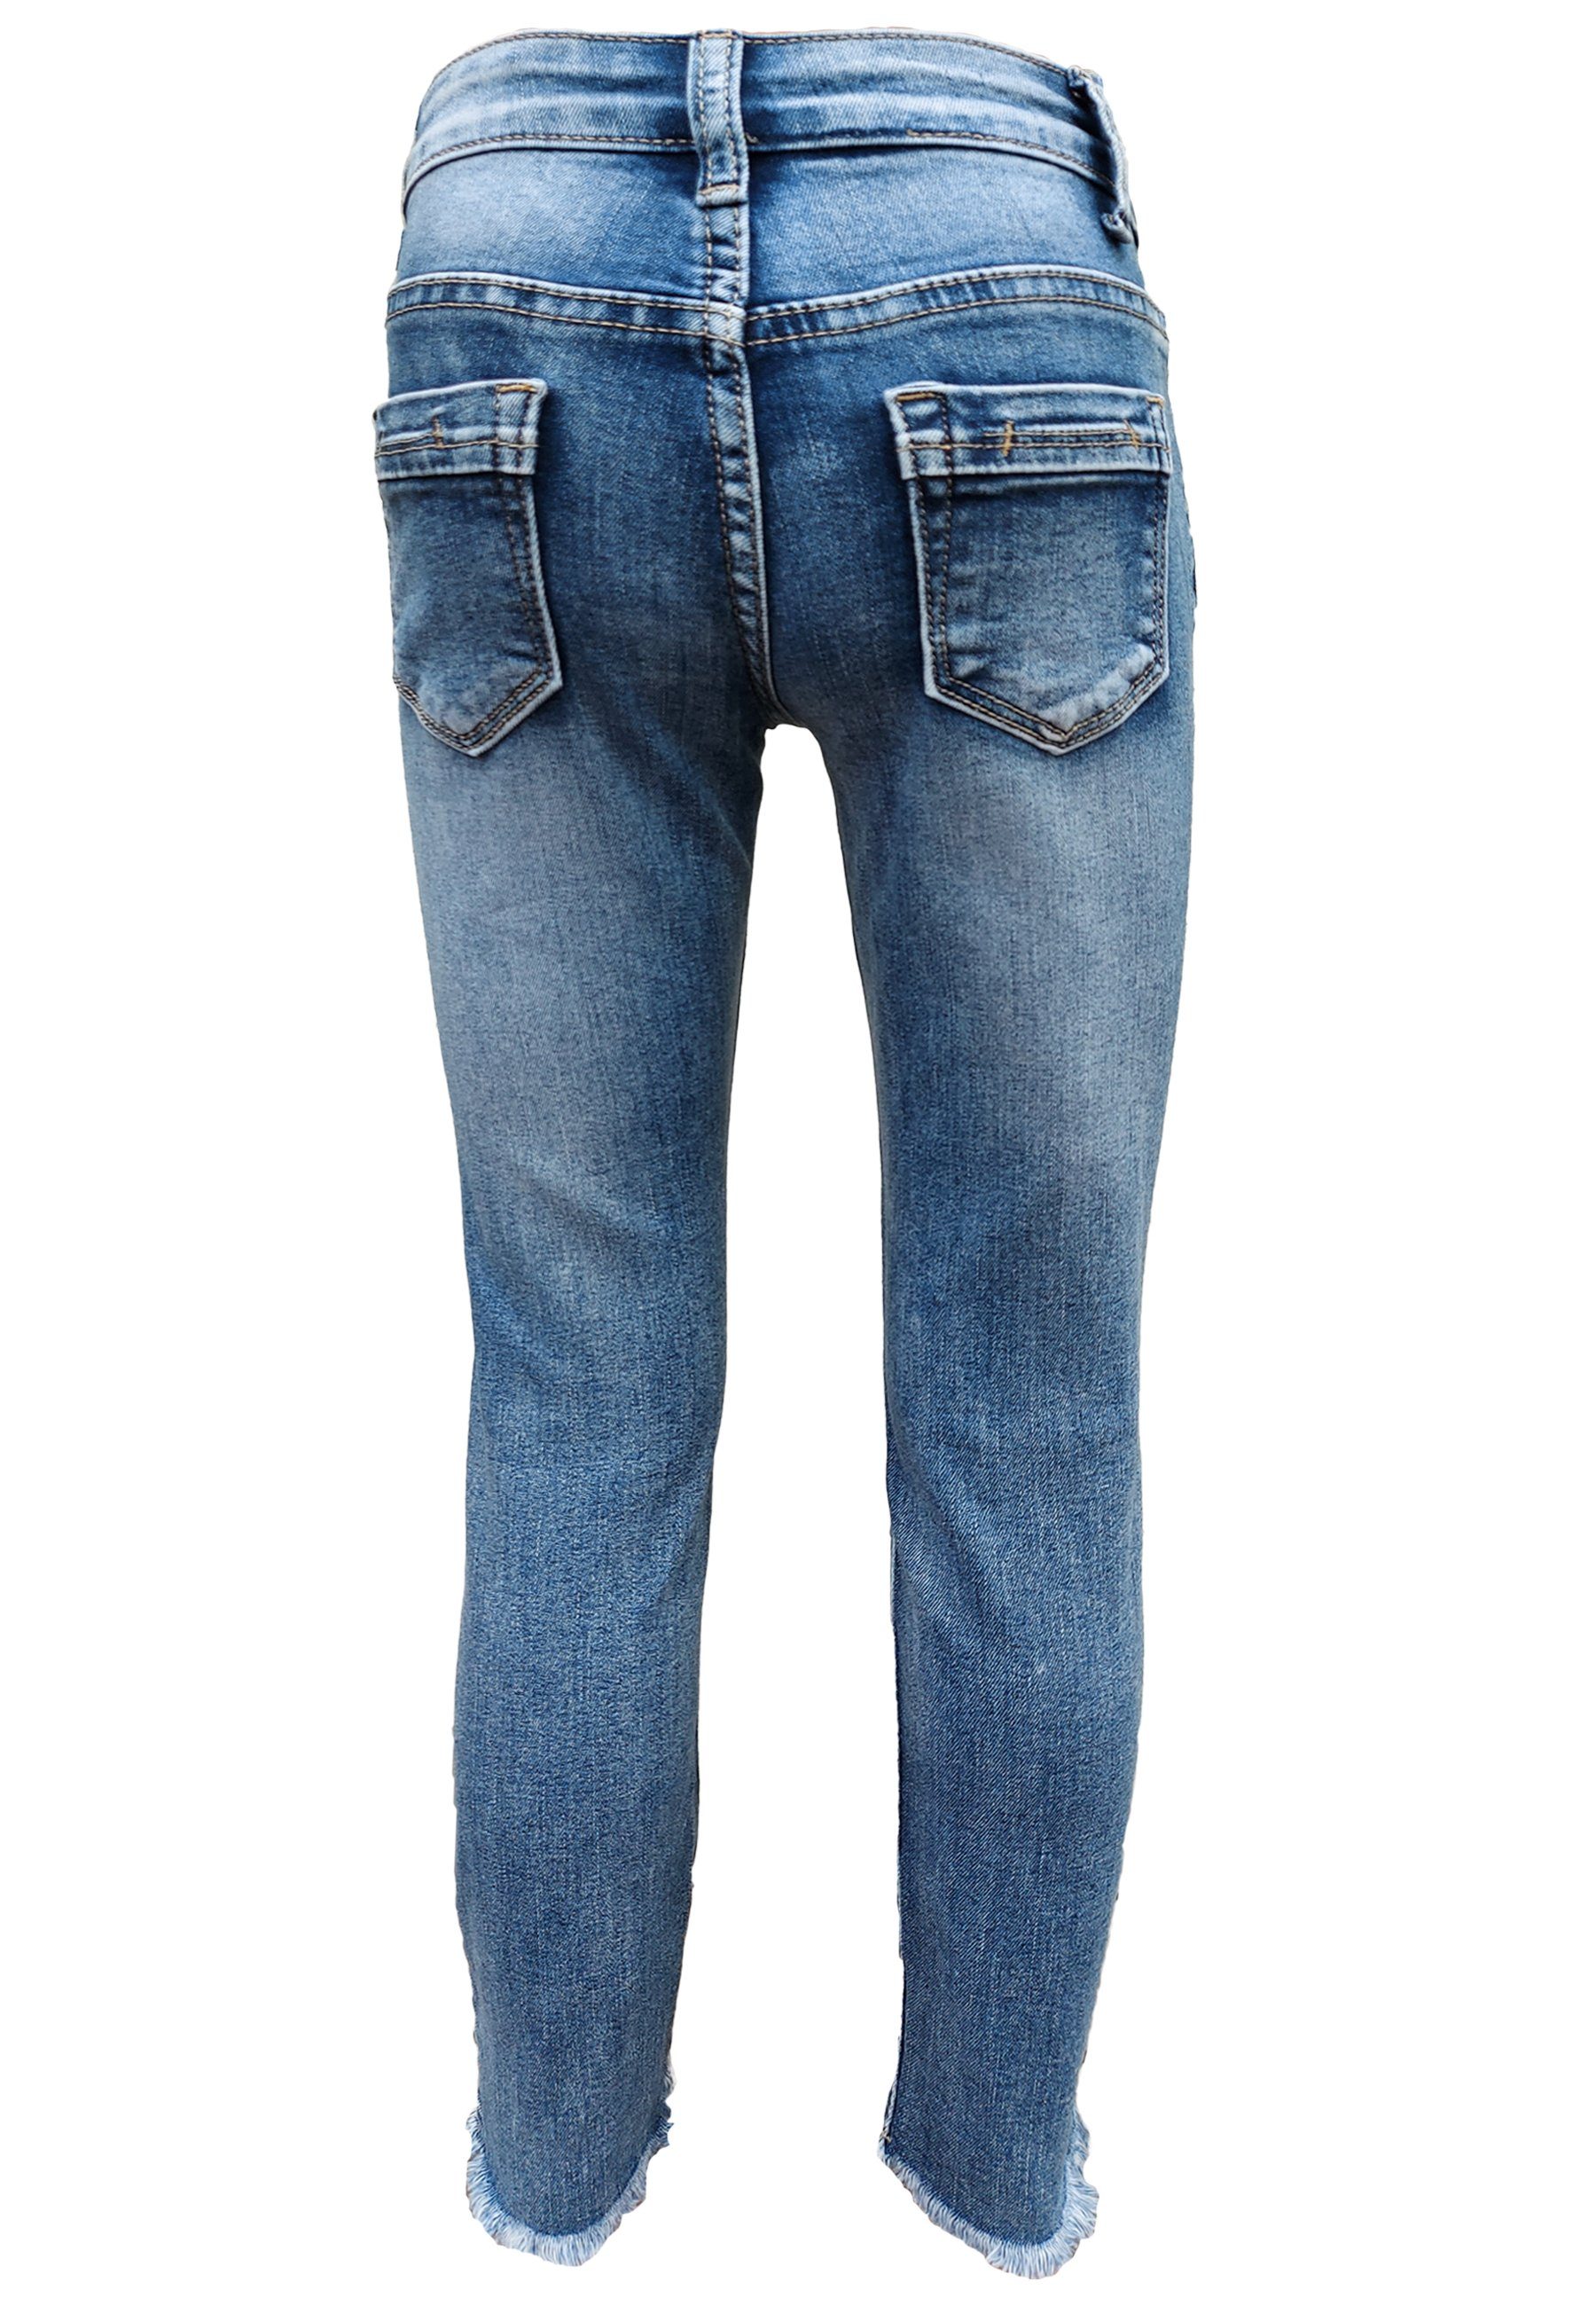 mit Trends Family ausgefranstem Slim-fit-Jeans Saum